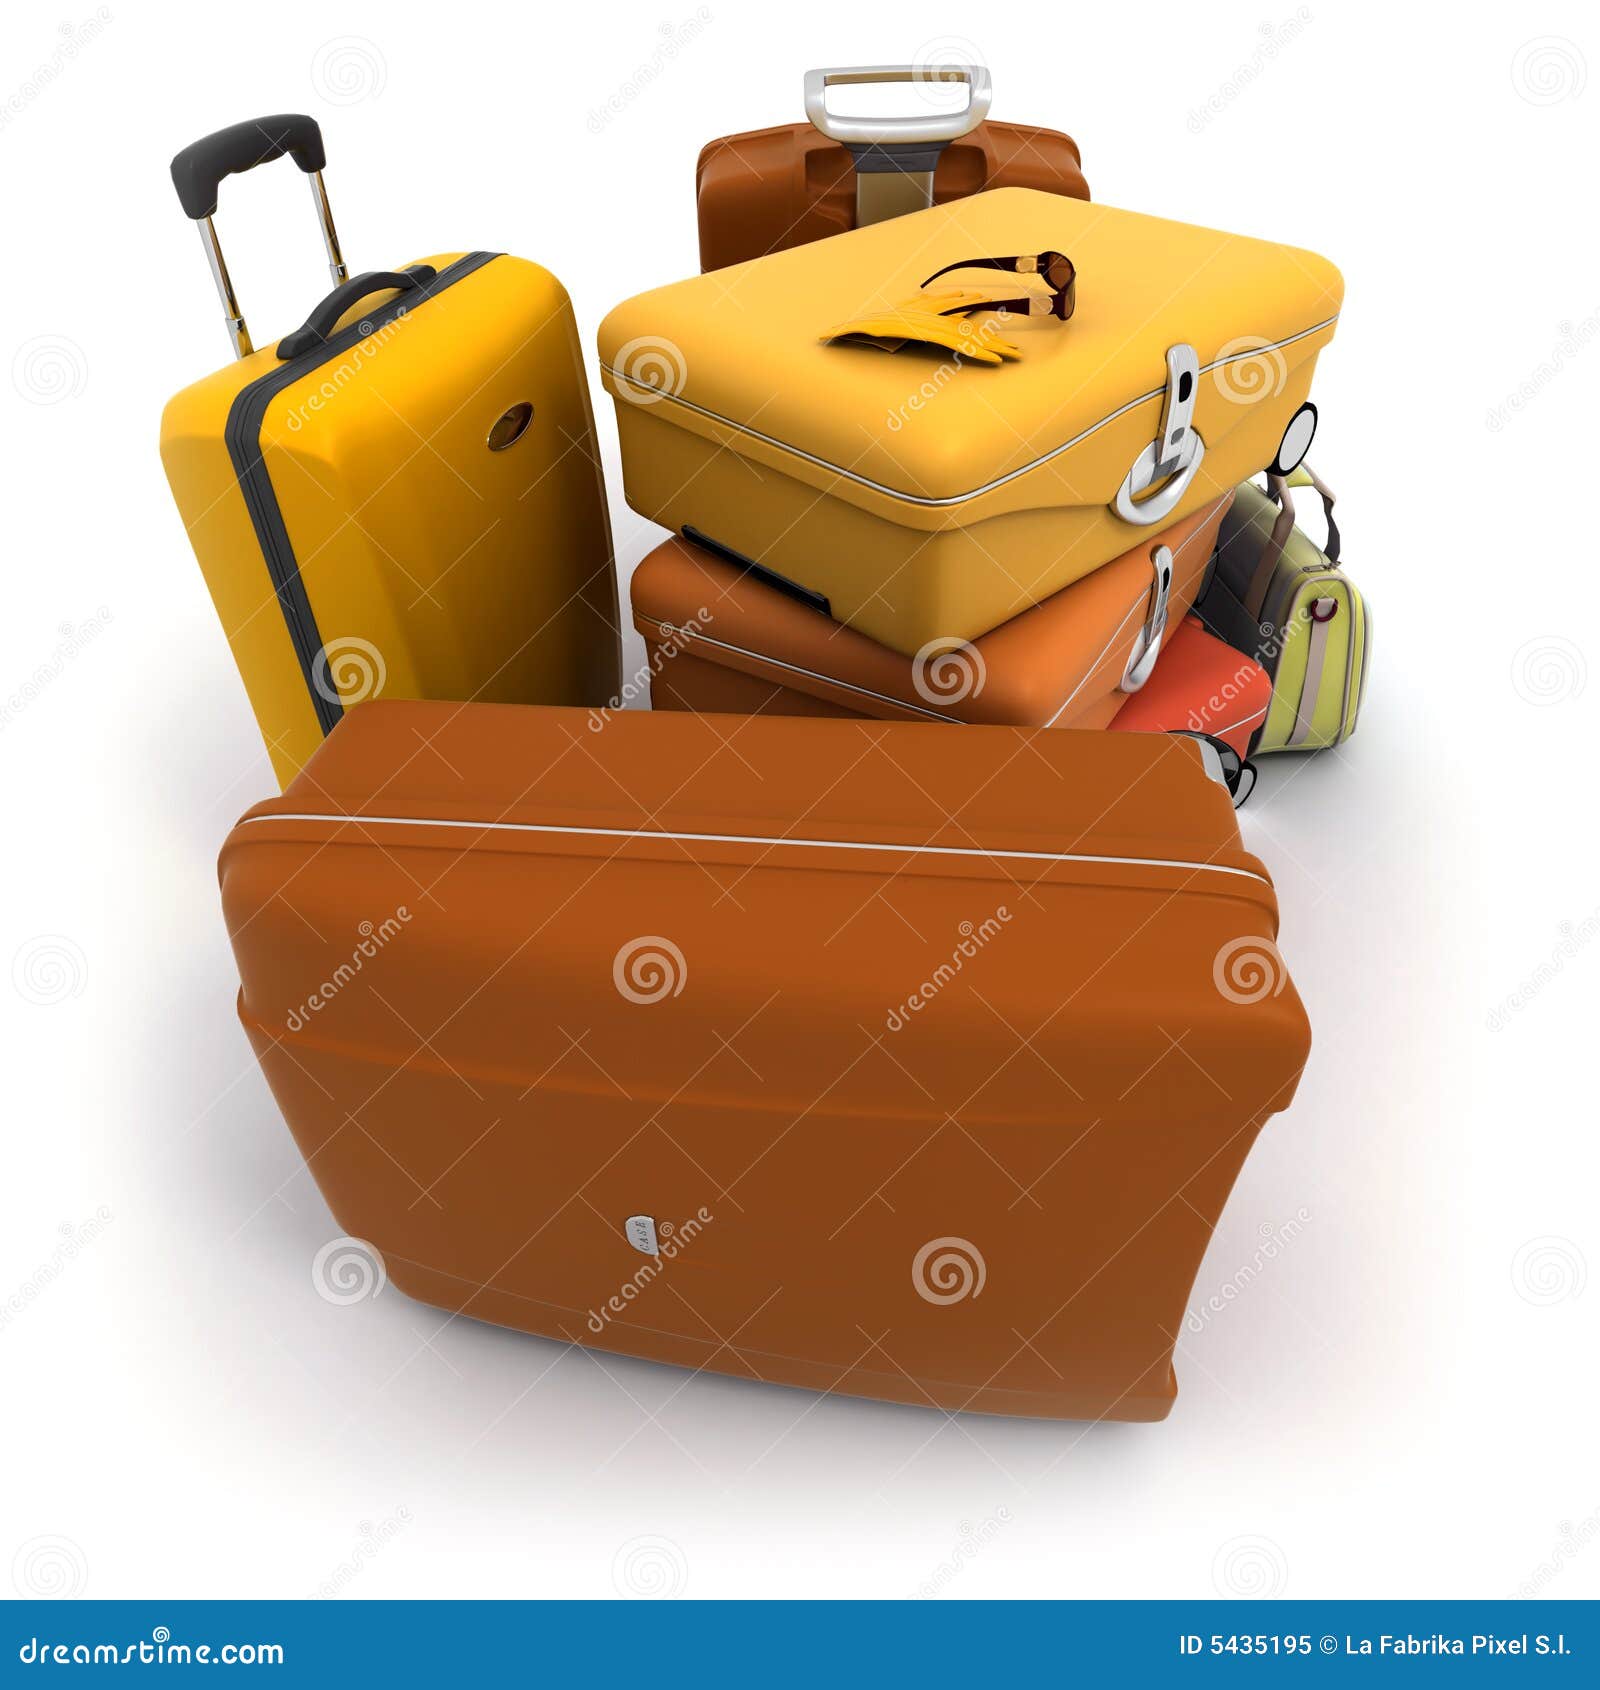 luggage kit in ochre shades